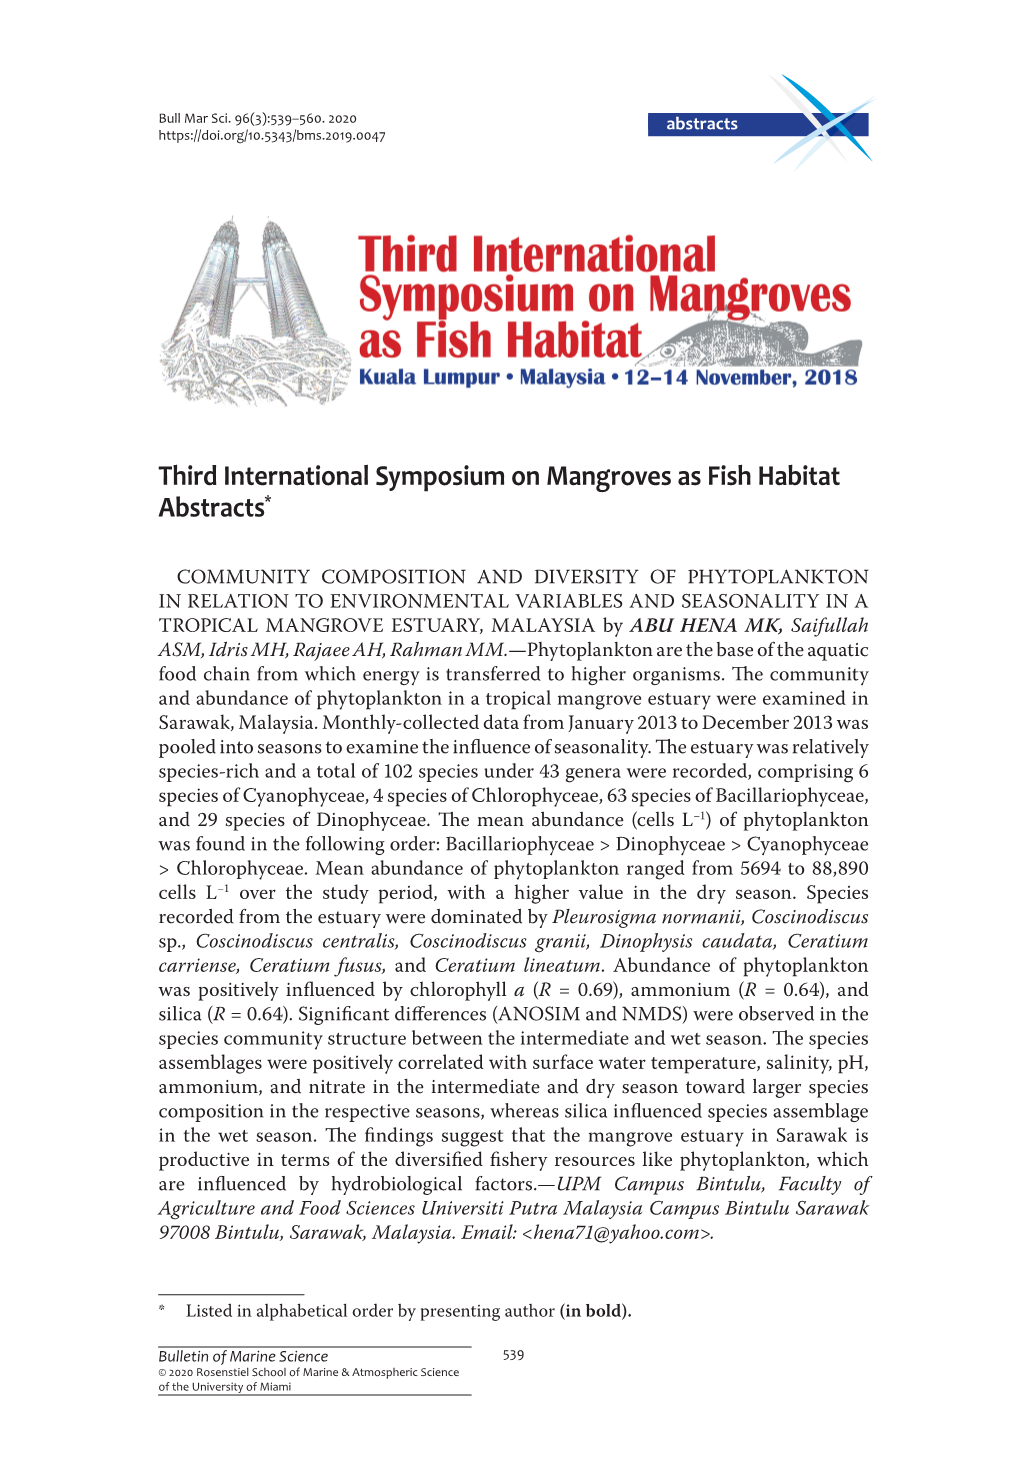 Third International Symposium on Mangroves As Fish Habitat Abstracts*